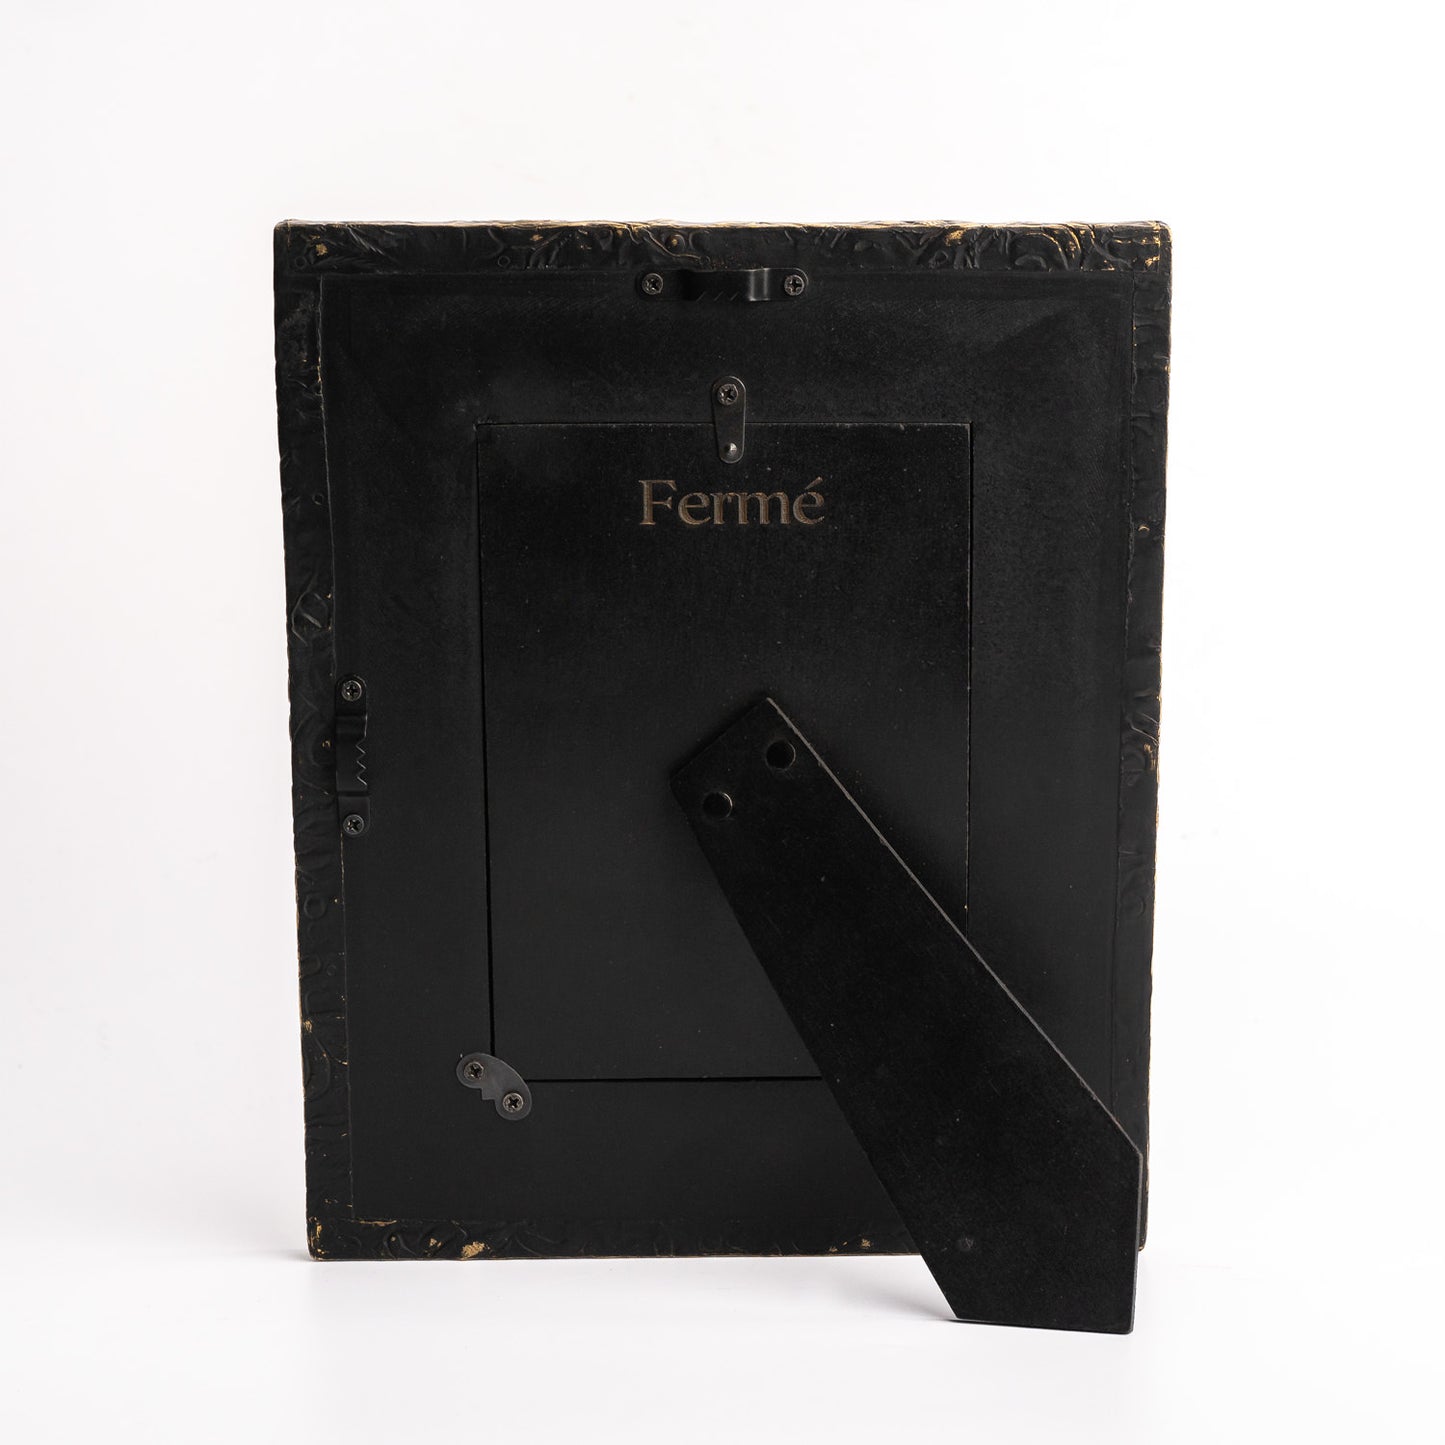 Ferme Premium Brass Metal Photo Frame Black FPF147 - 5x7 inches